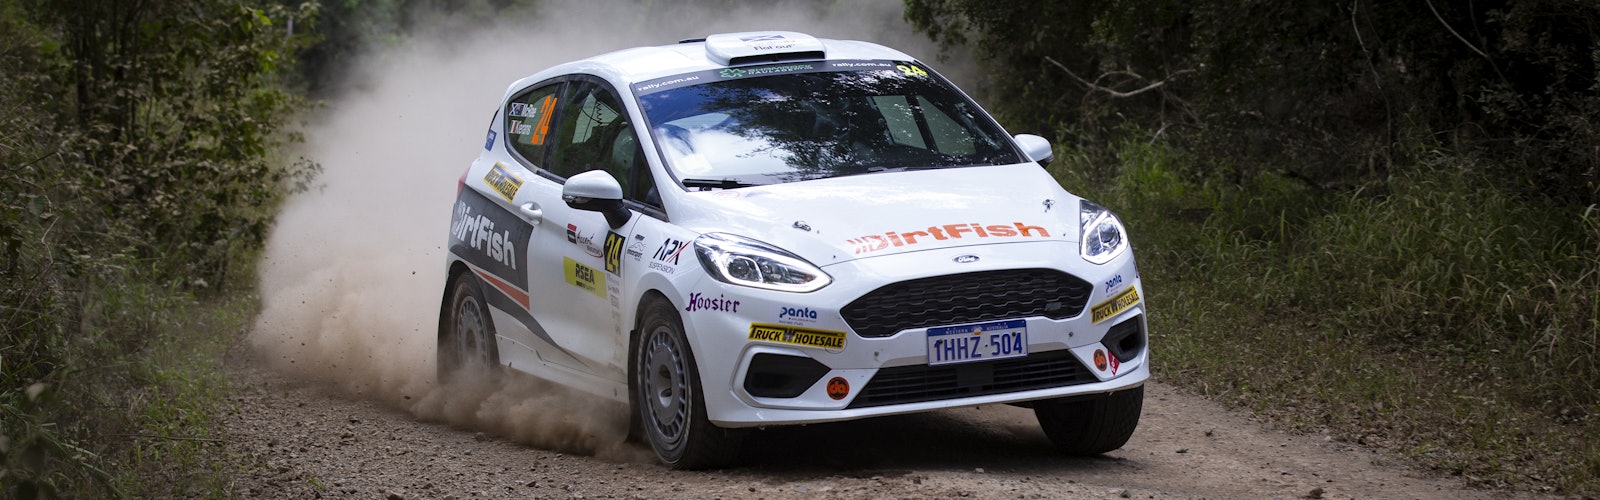 Max McRae – Australian Rally Championship – Rally Queensland 2021.